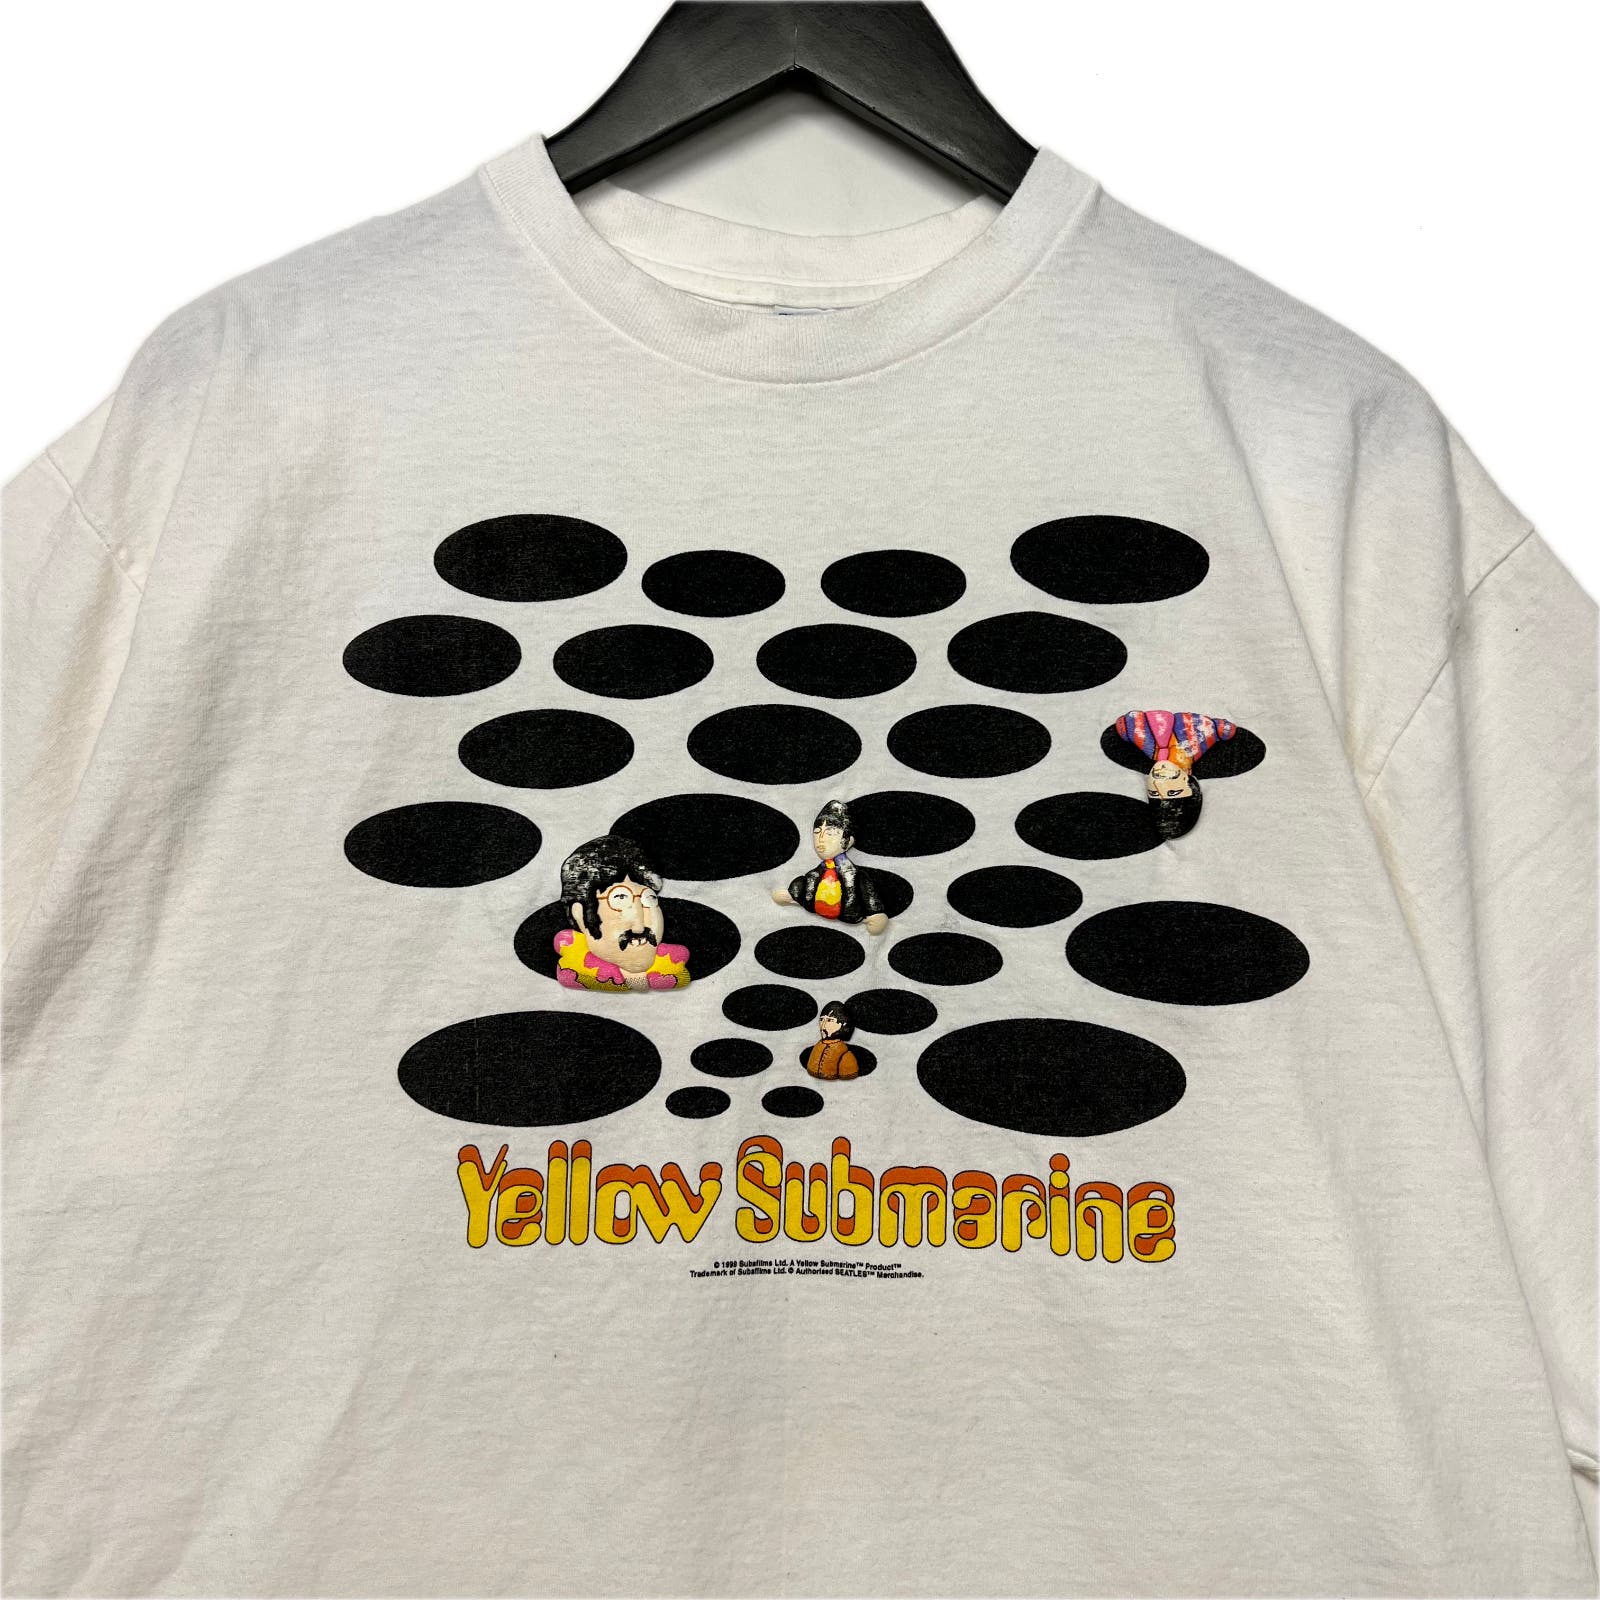 1999 The Beatles Yellow Submarine T-shirt Size XL